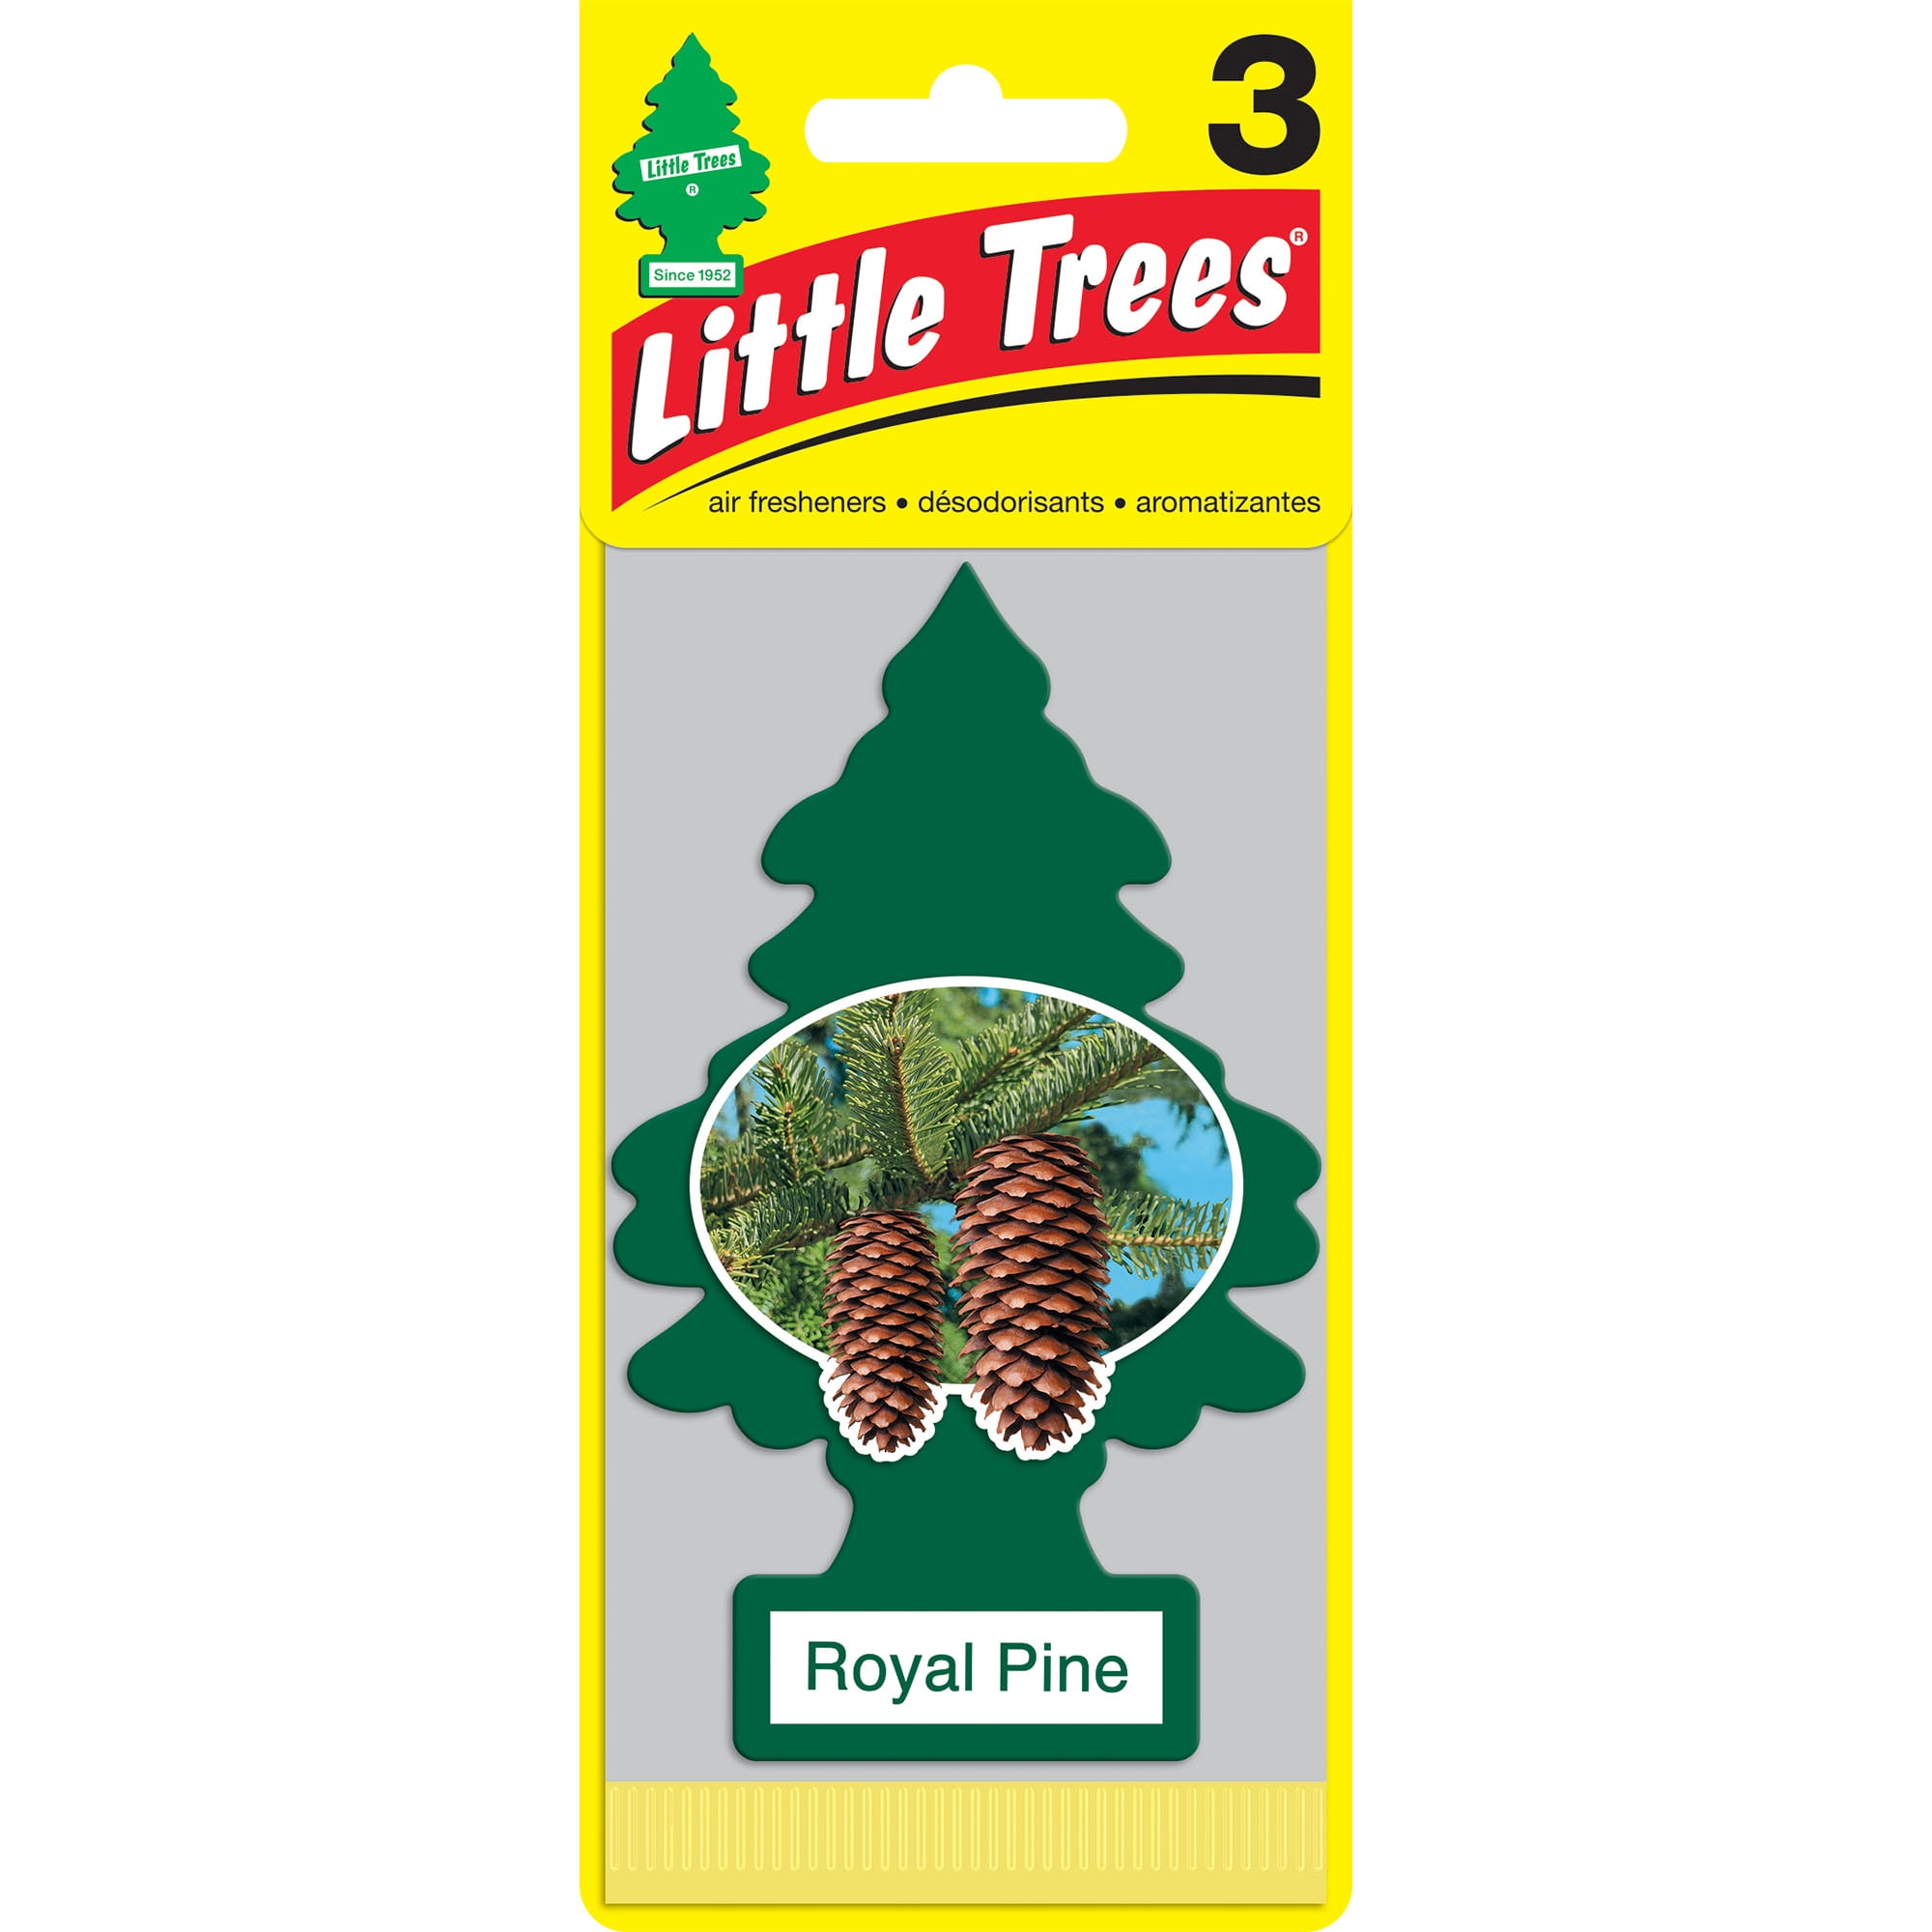 Little Trees Air Fresheners Royal Pine Fragrance 3-Pack